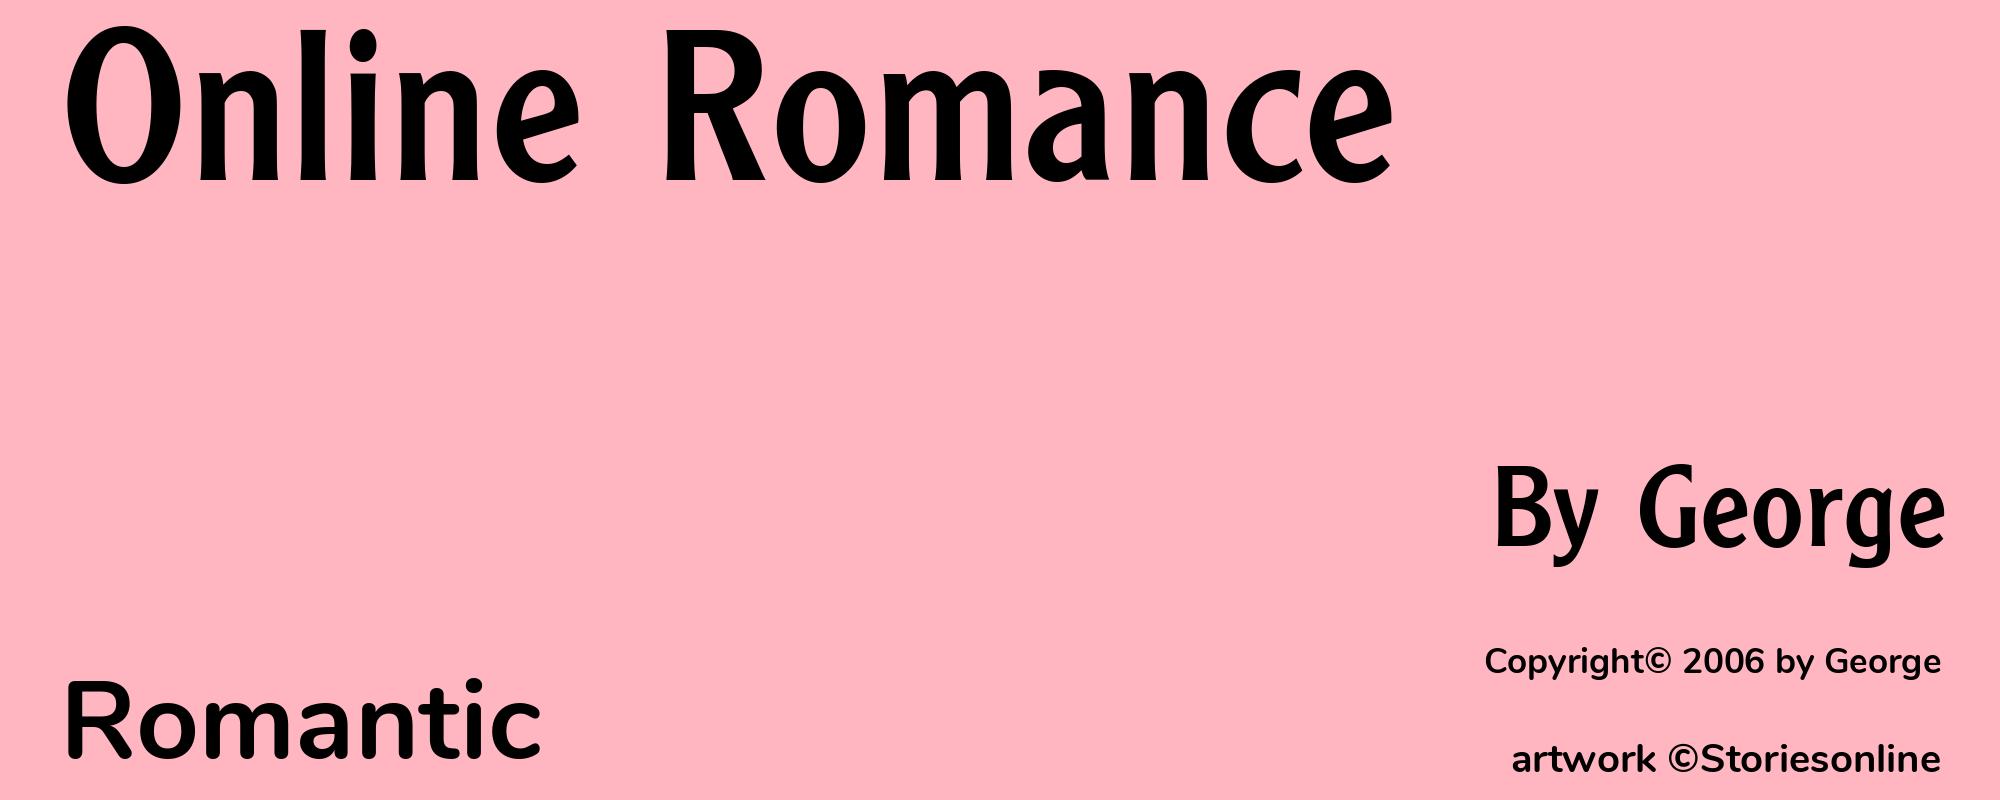 Online Romance - Cover